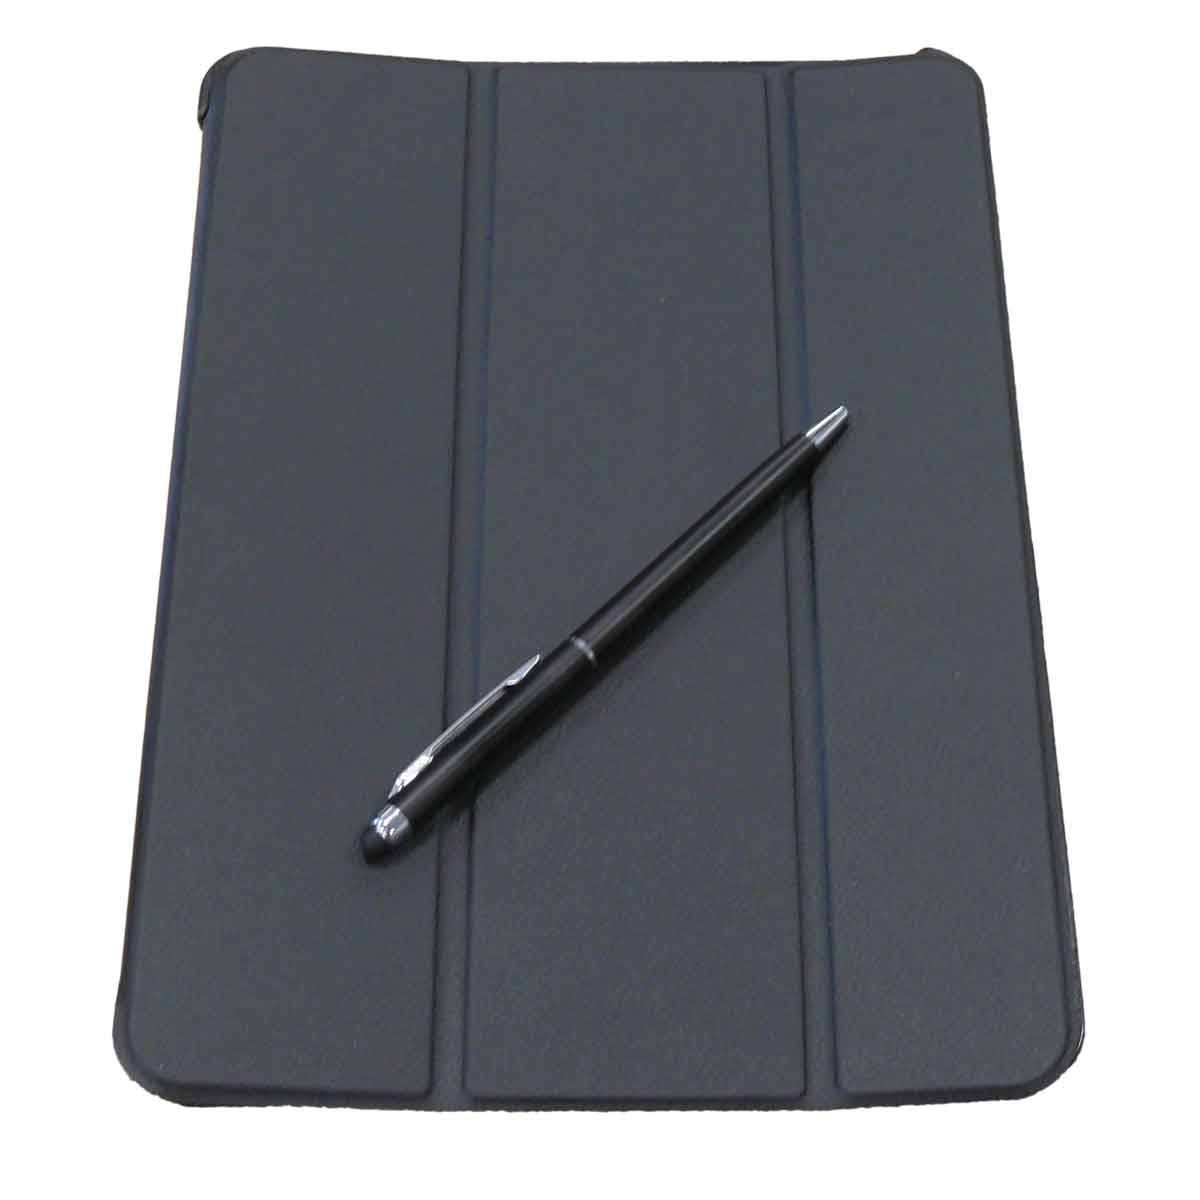 Etui Galaxy Tab S2 schwarz + Pen